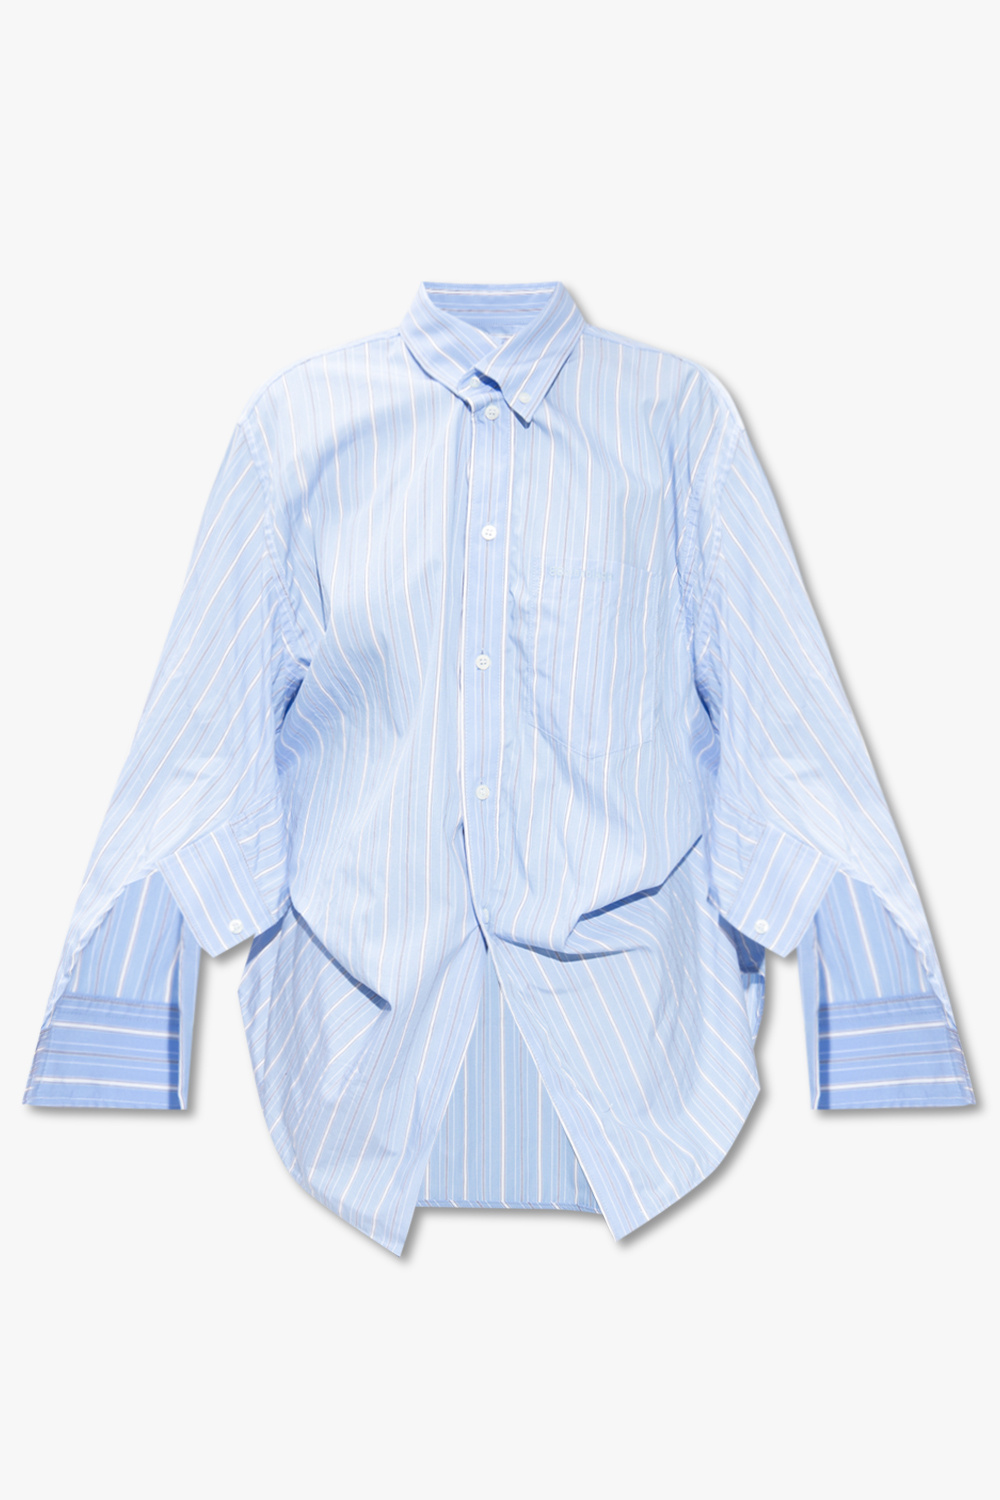 Balenciaga Oversize margiela shirt